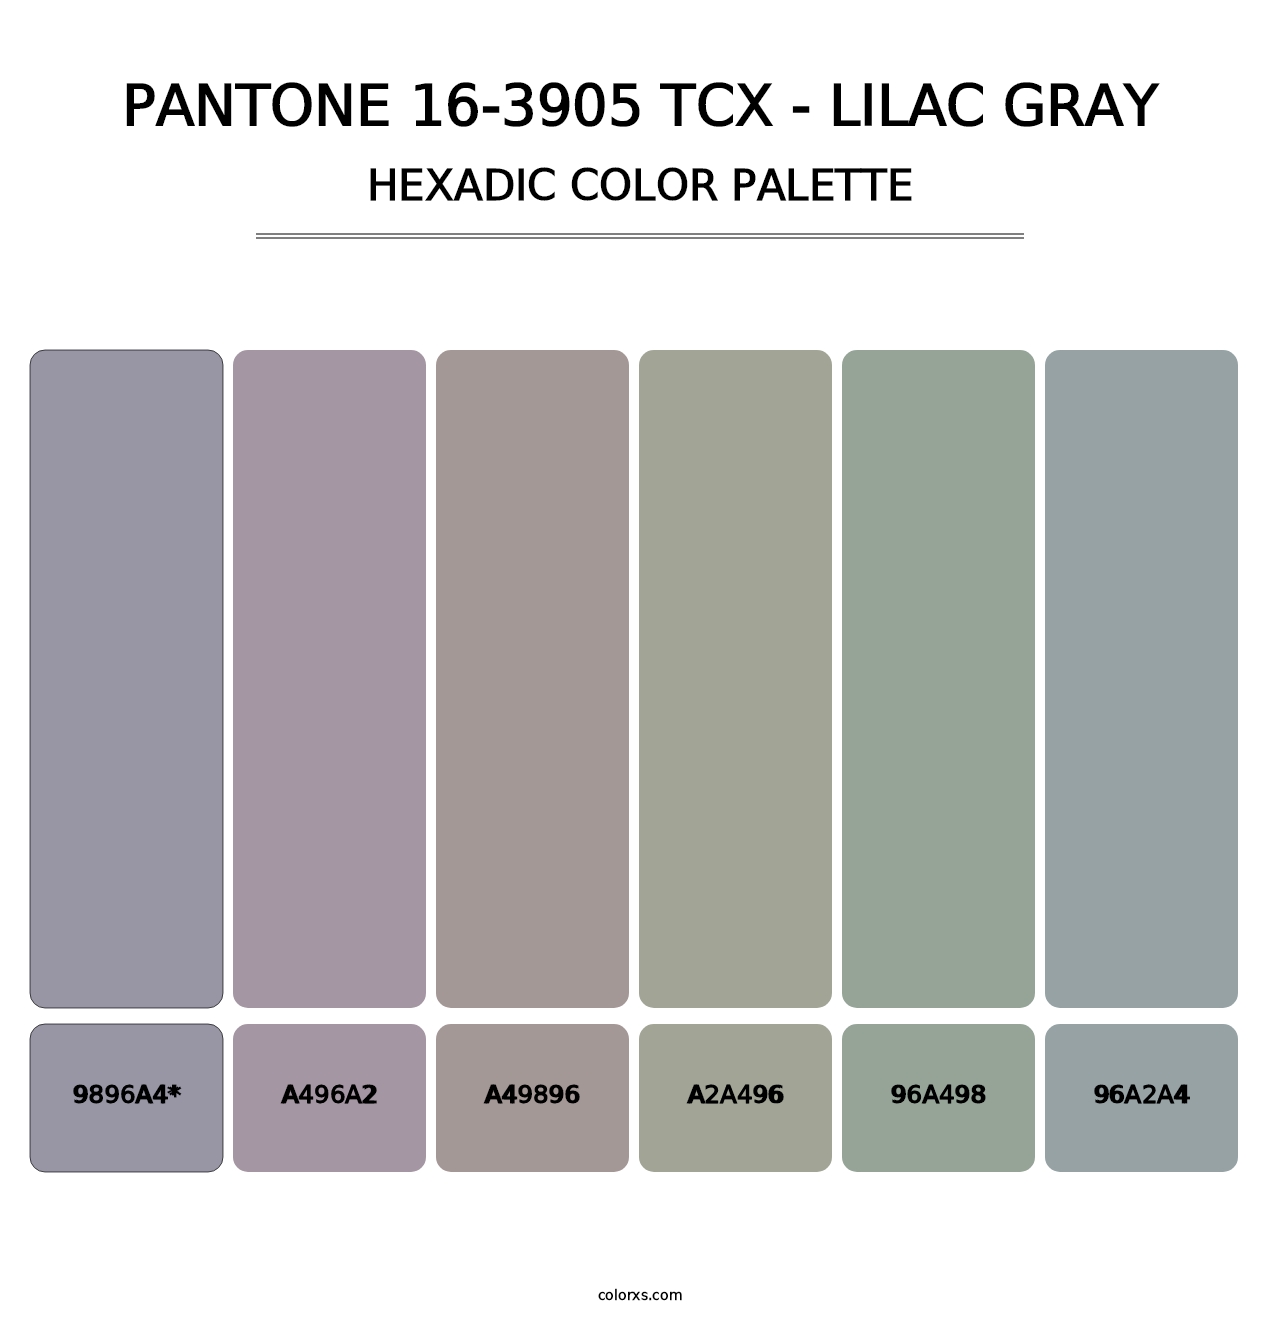 PANTONE 16-3905 TCX - Lilac Gray - Hexadic Color Palette